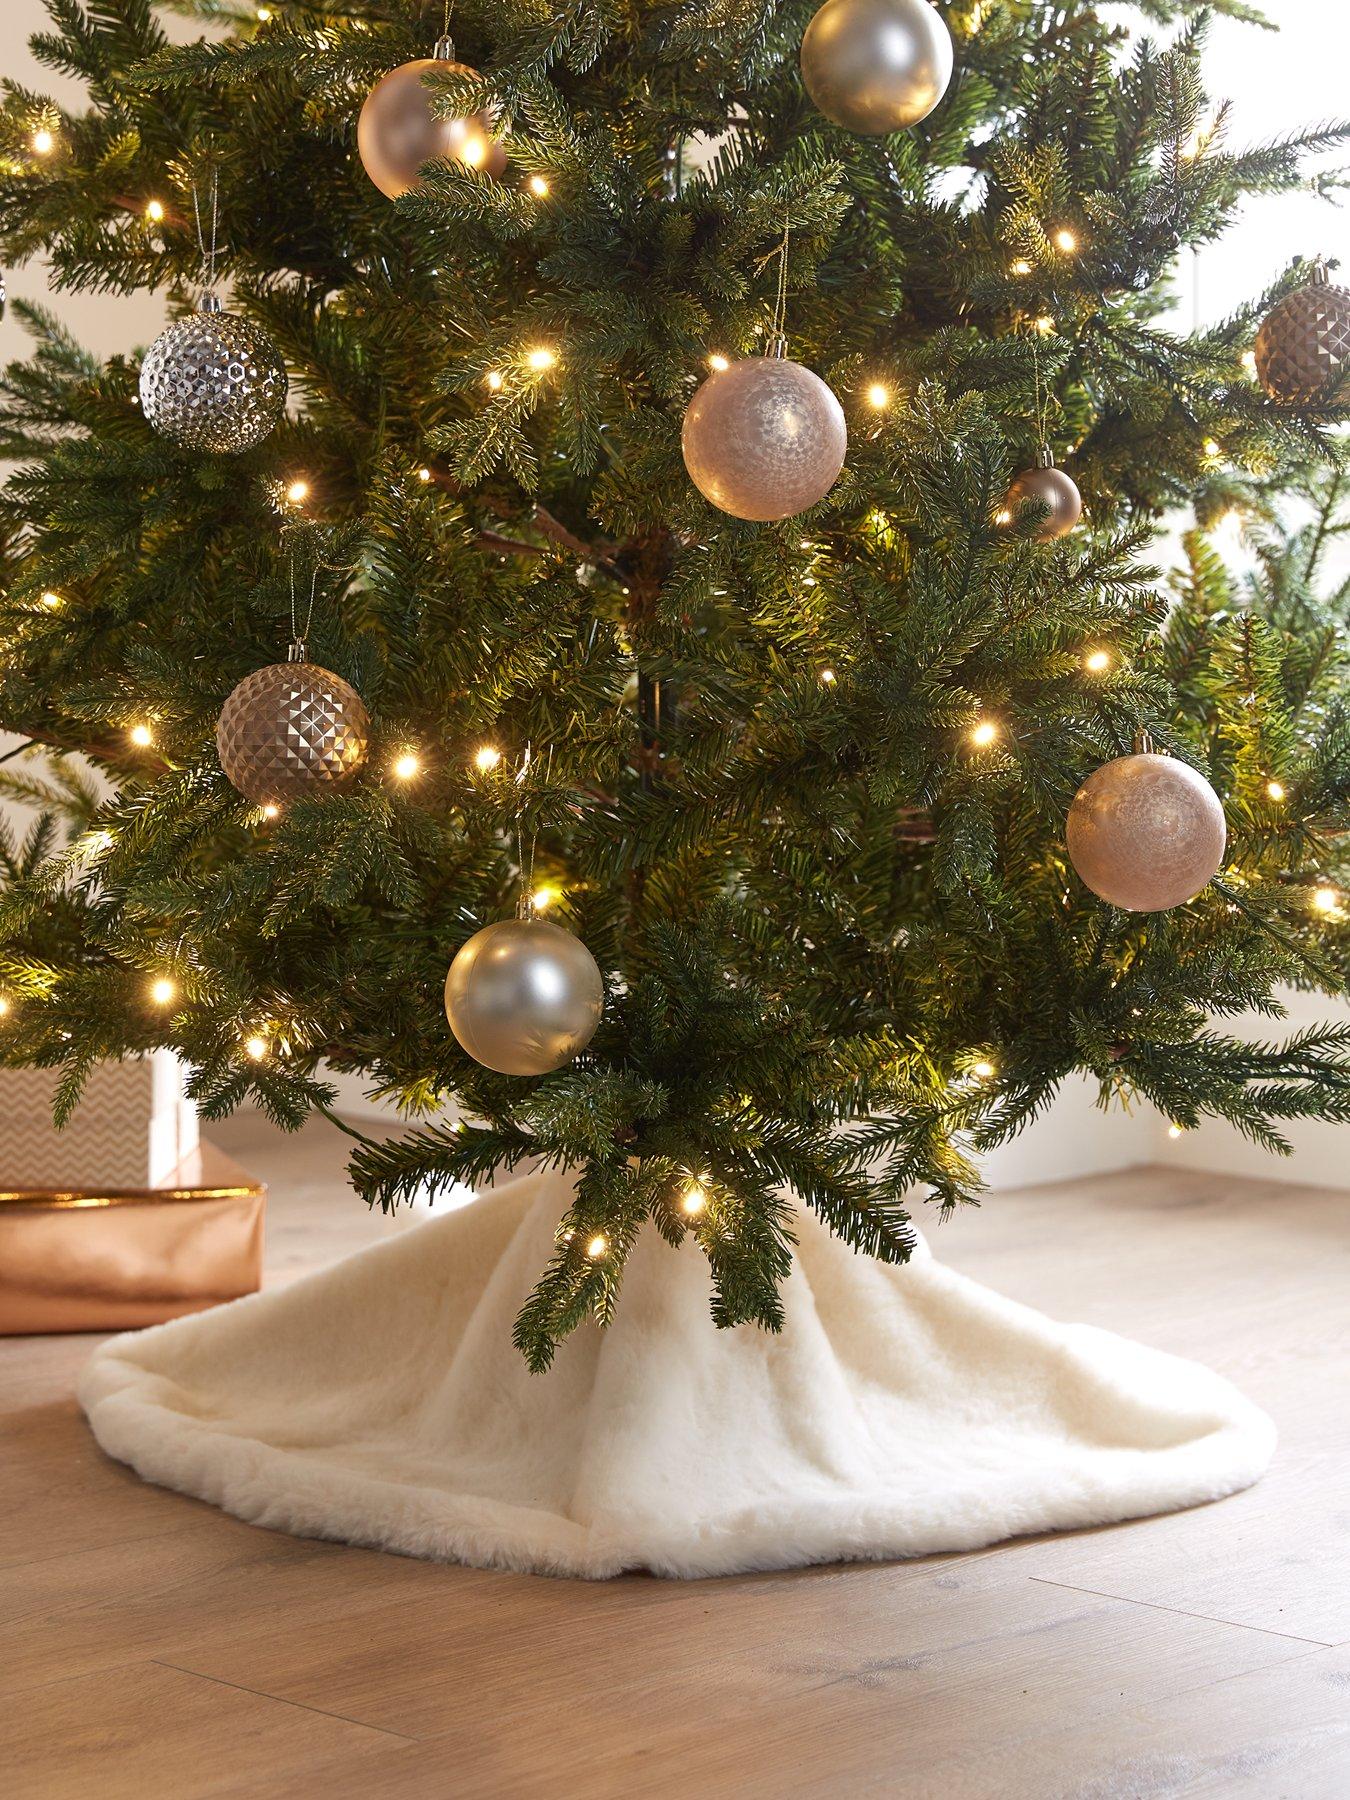 DANIEL JAMES Housewares Christmas Tree Decoration Skirt Base Floor Cover Wicker Stand Willow Wood Rattan 